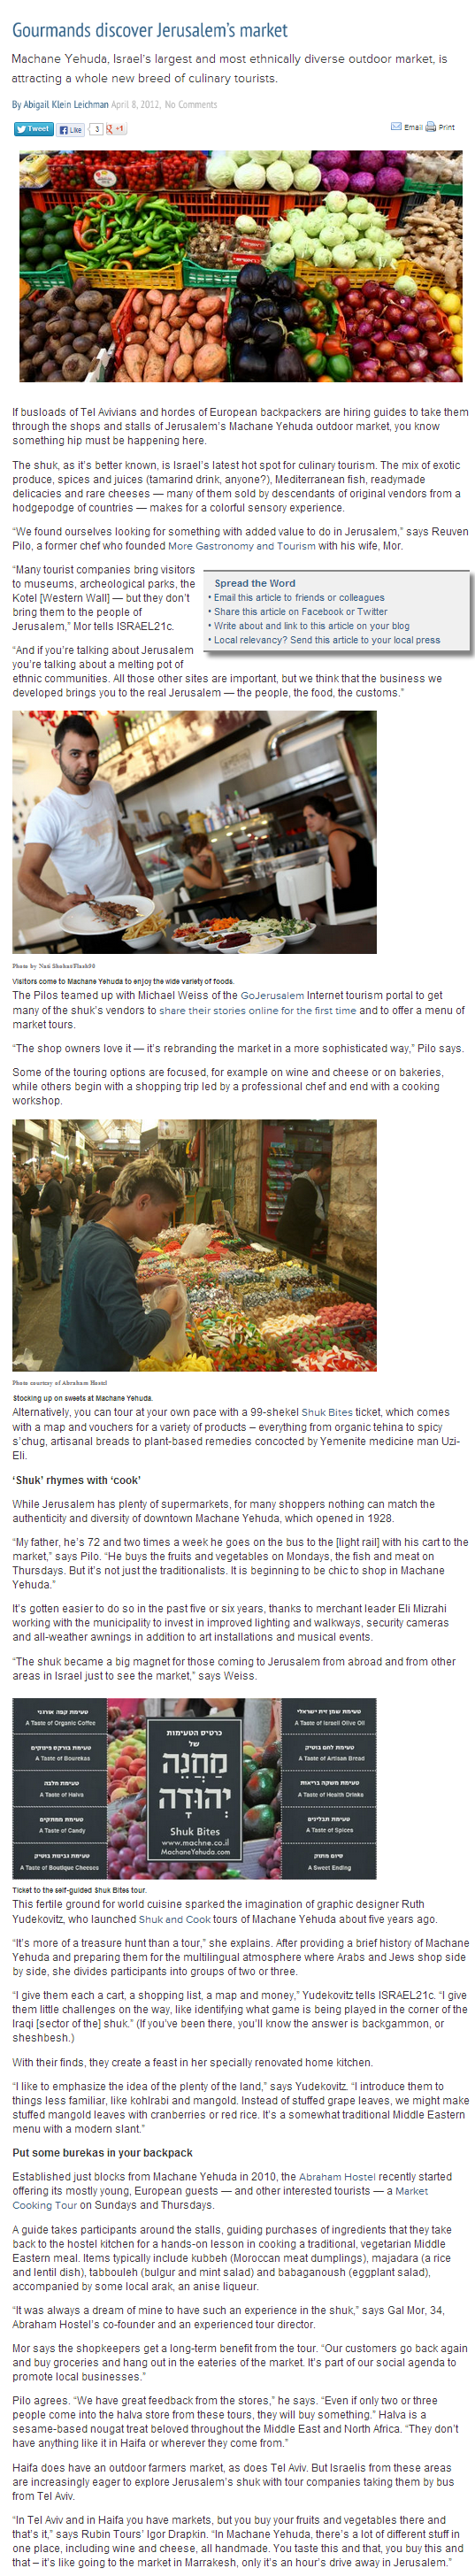 Gourmand's Discover Jerusalem's Market